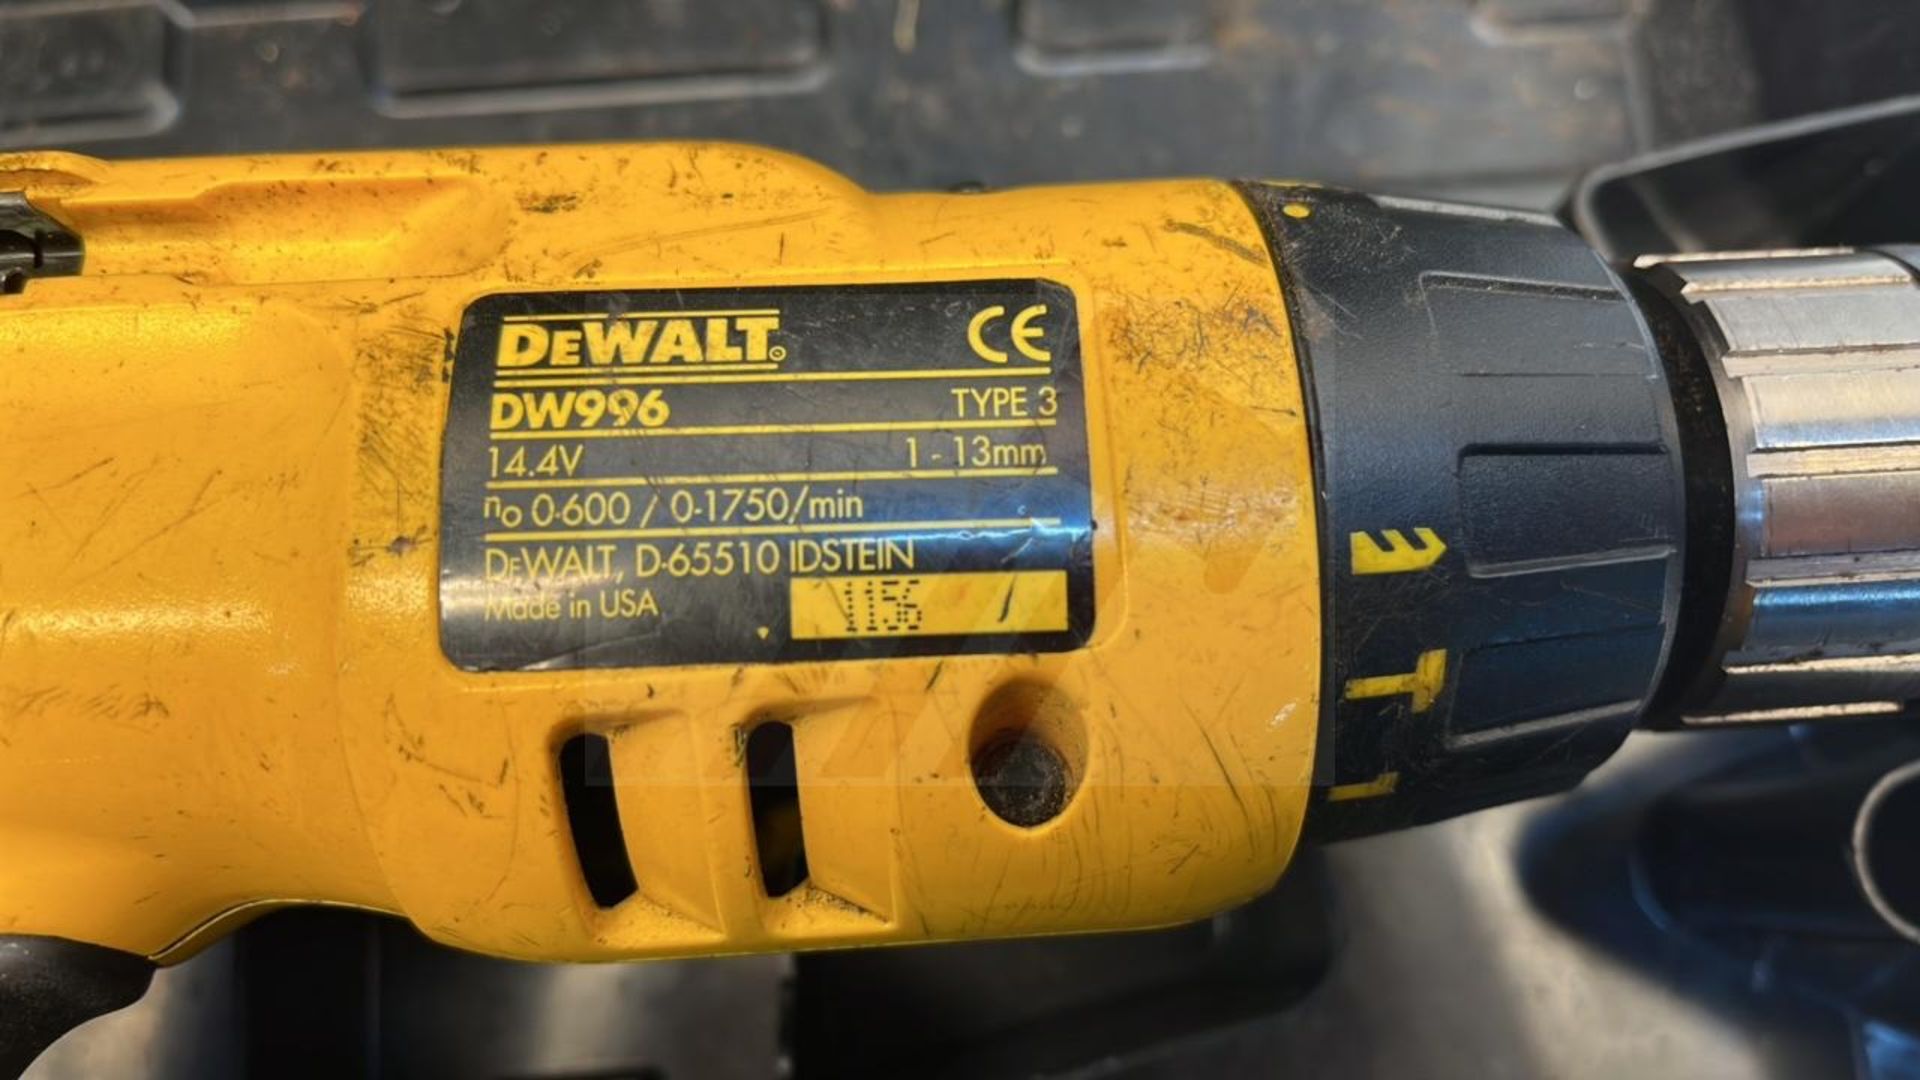 DeWalt DW 996 cordless drill - Image 3 of 3